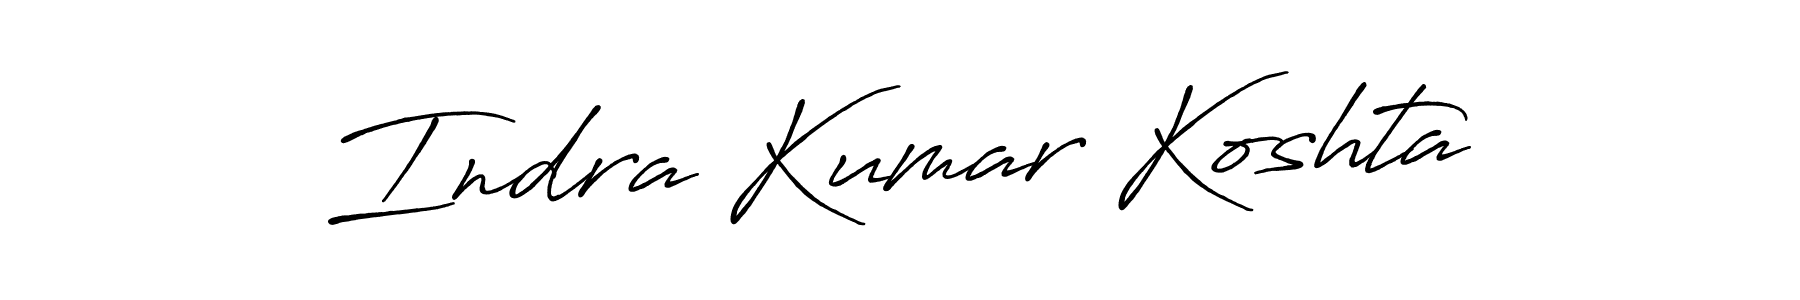 How to Draw Indra Kumar Koshta signature style? Antro_Vectra_Bolder is a latest design signature styles for name Indra Kumar Koshta. Indra Kumar Koshta signature style 7 images and pictures png